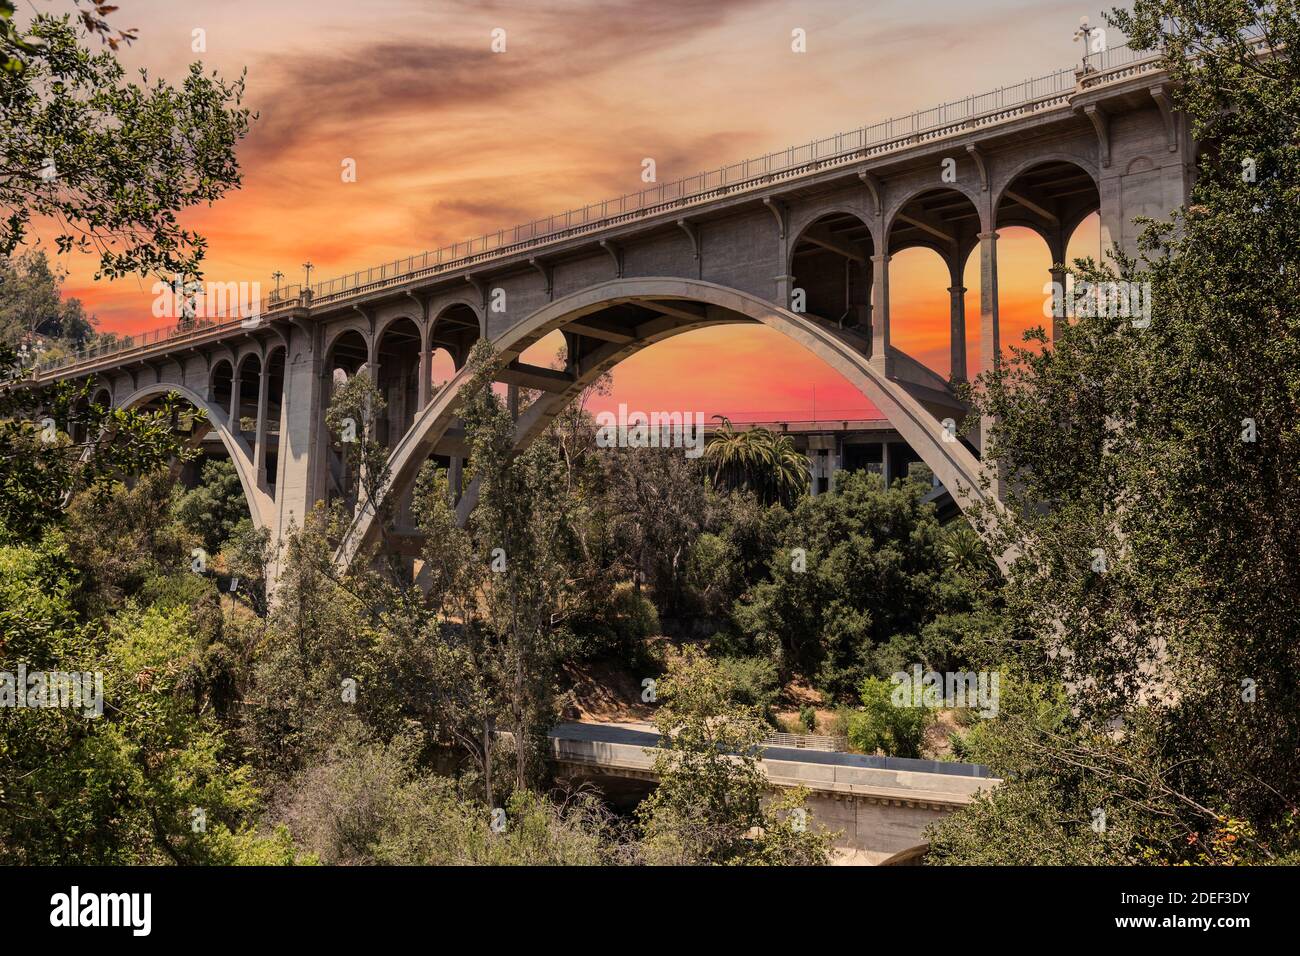 View of the historic Colorado Blvd bridge with sunset sky in Pasadena, California. Stock Photo